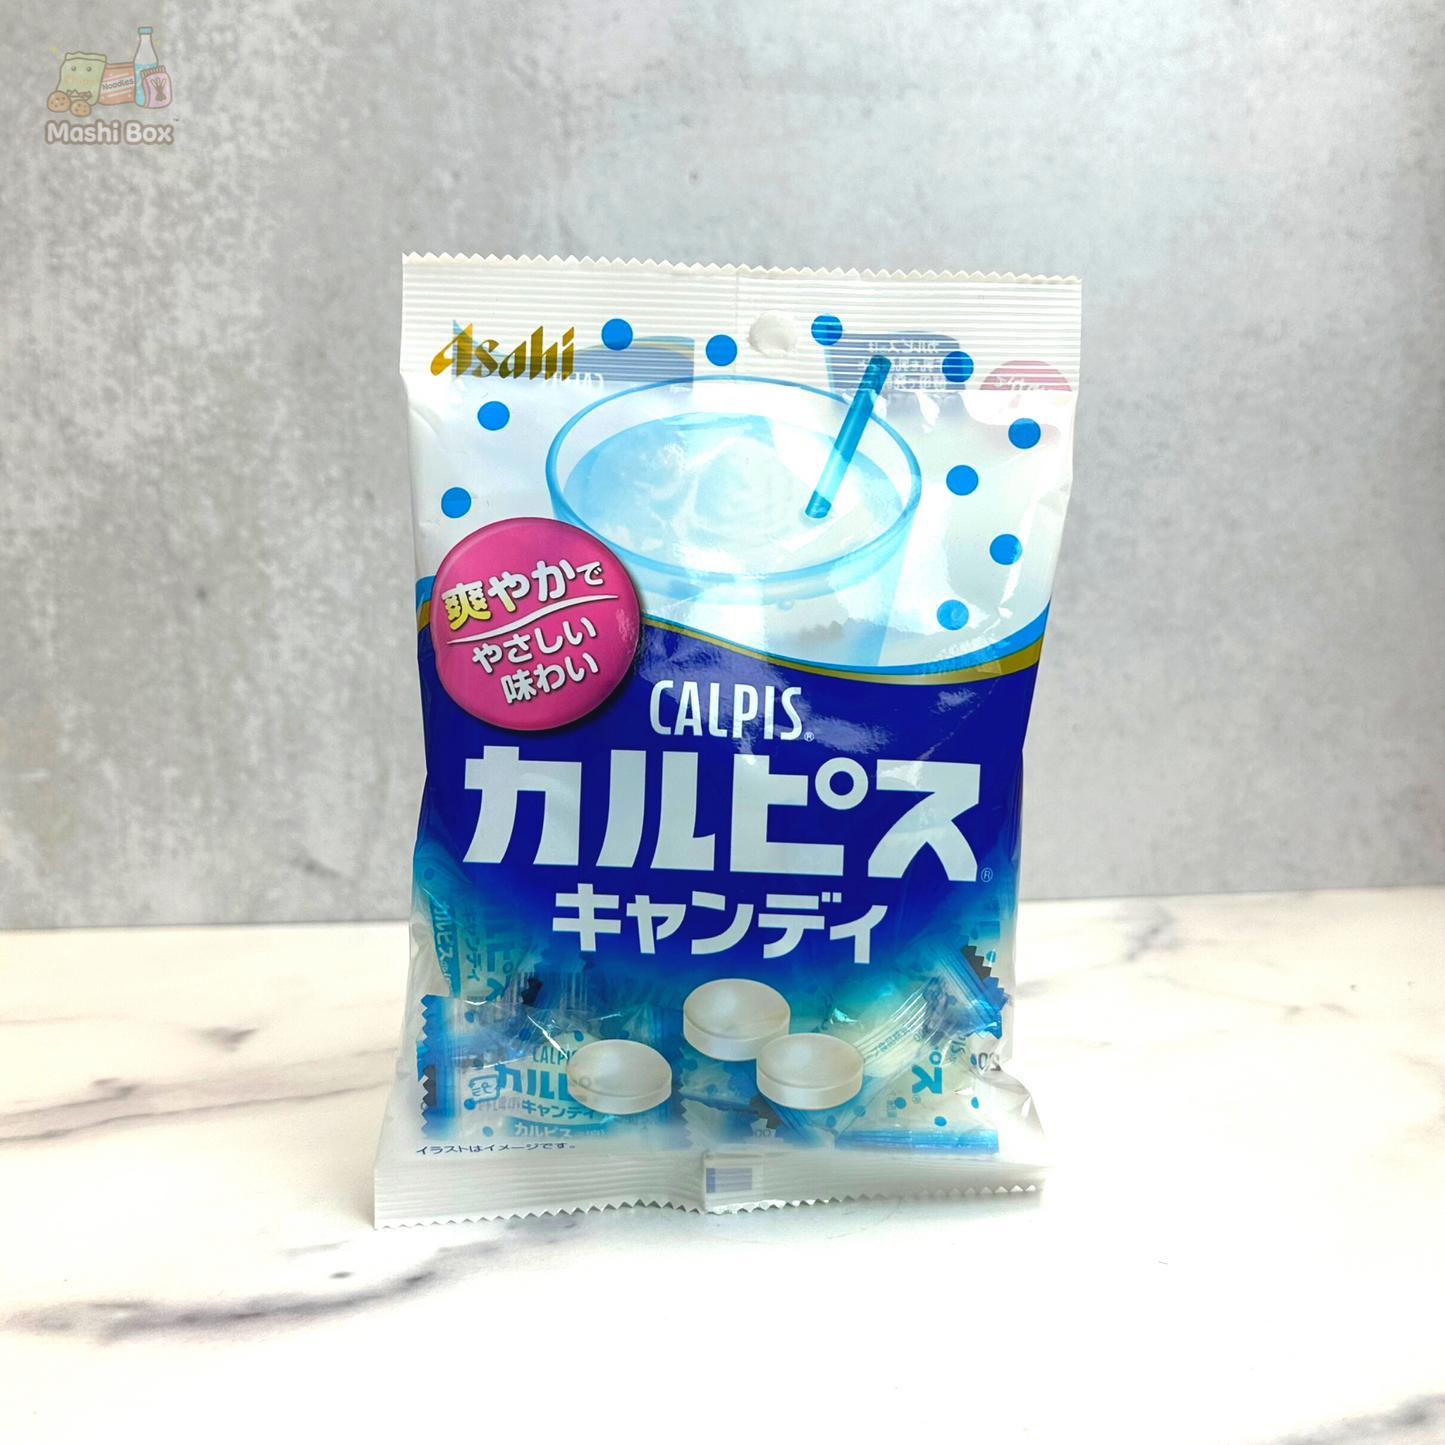 Asahi Calpis Japanese Soda Candy